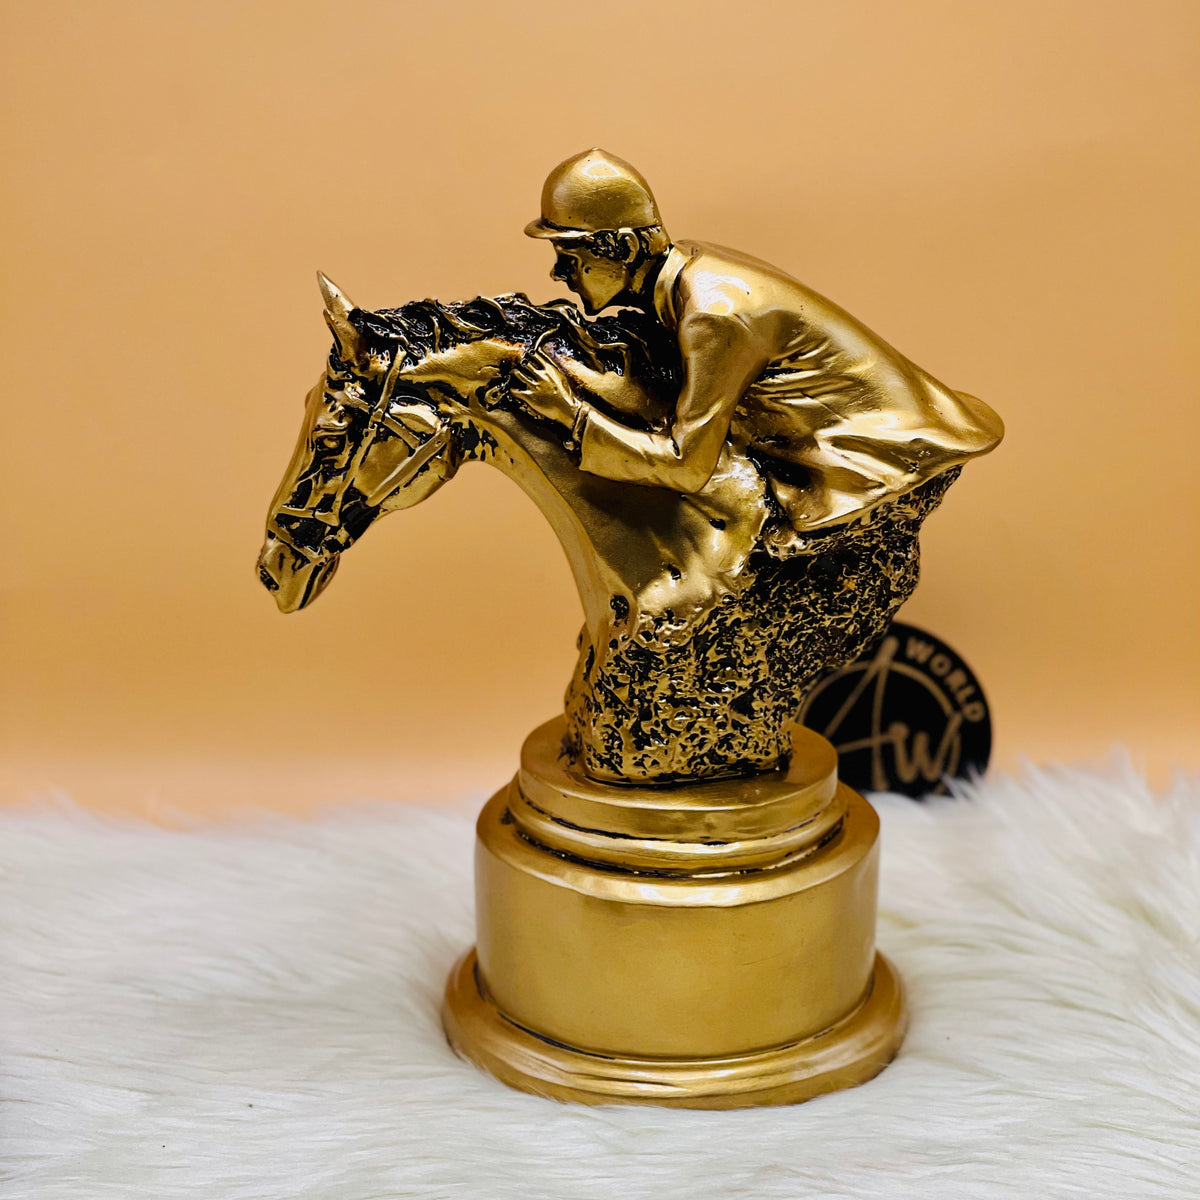 Race Horse and Jockey Rider Sculpture